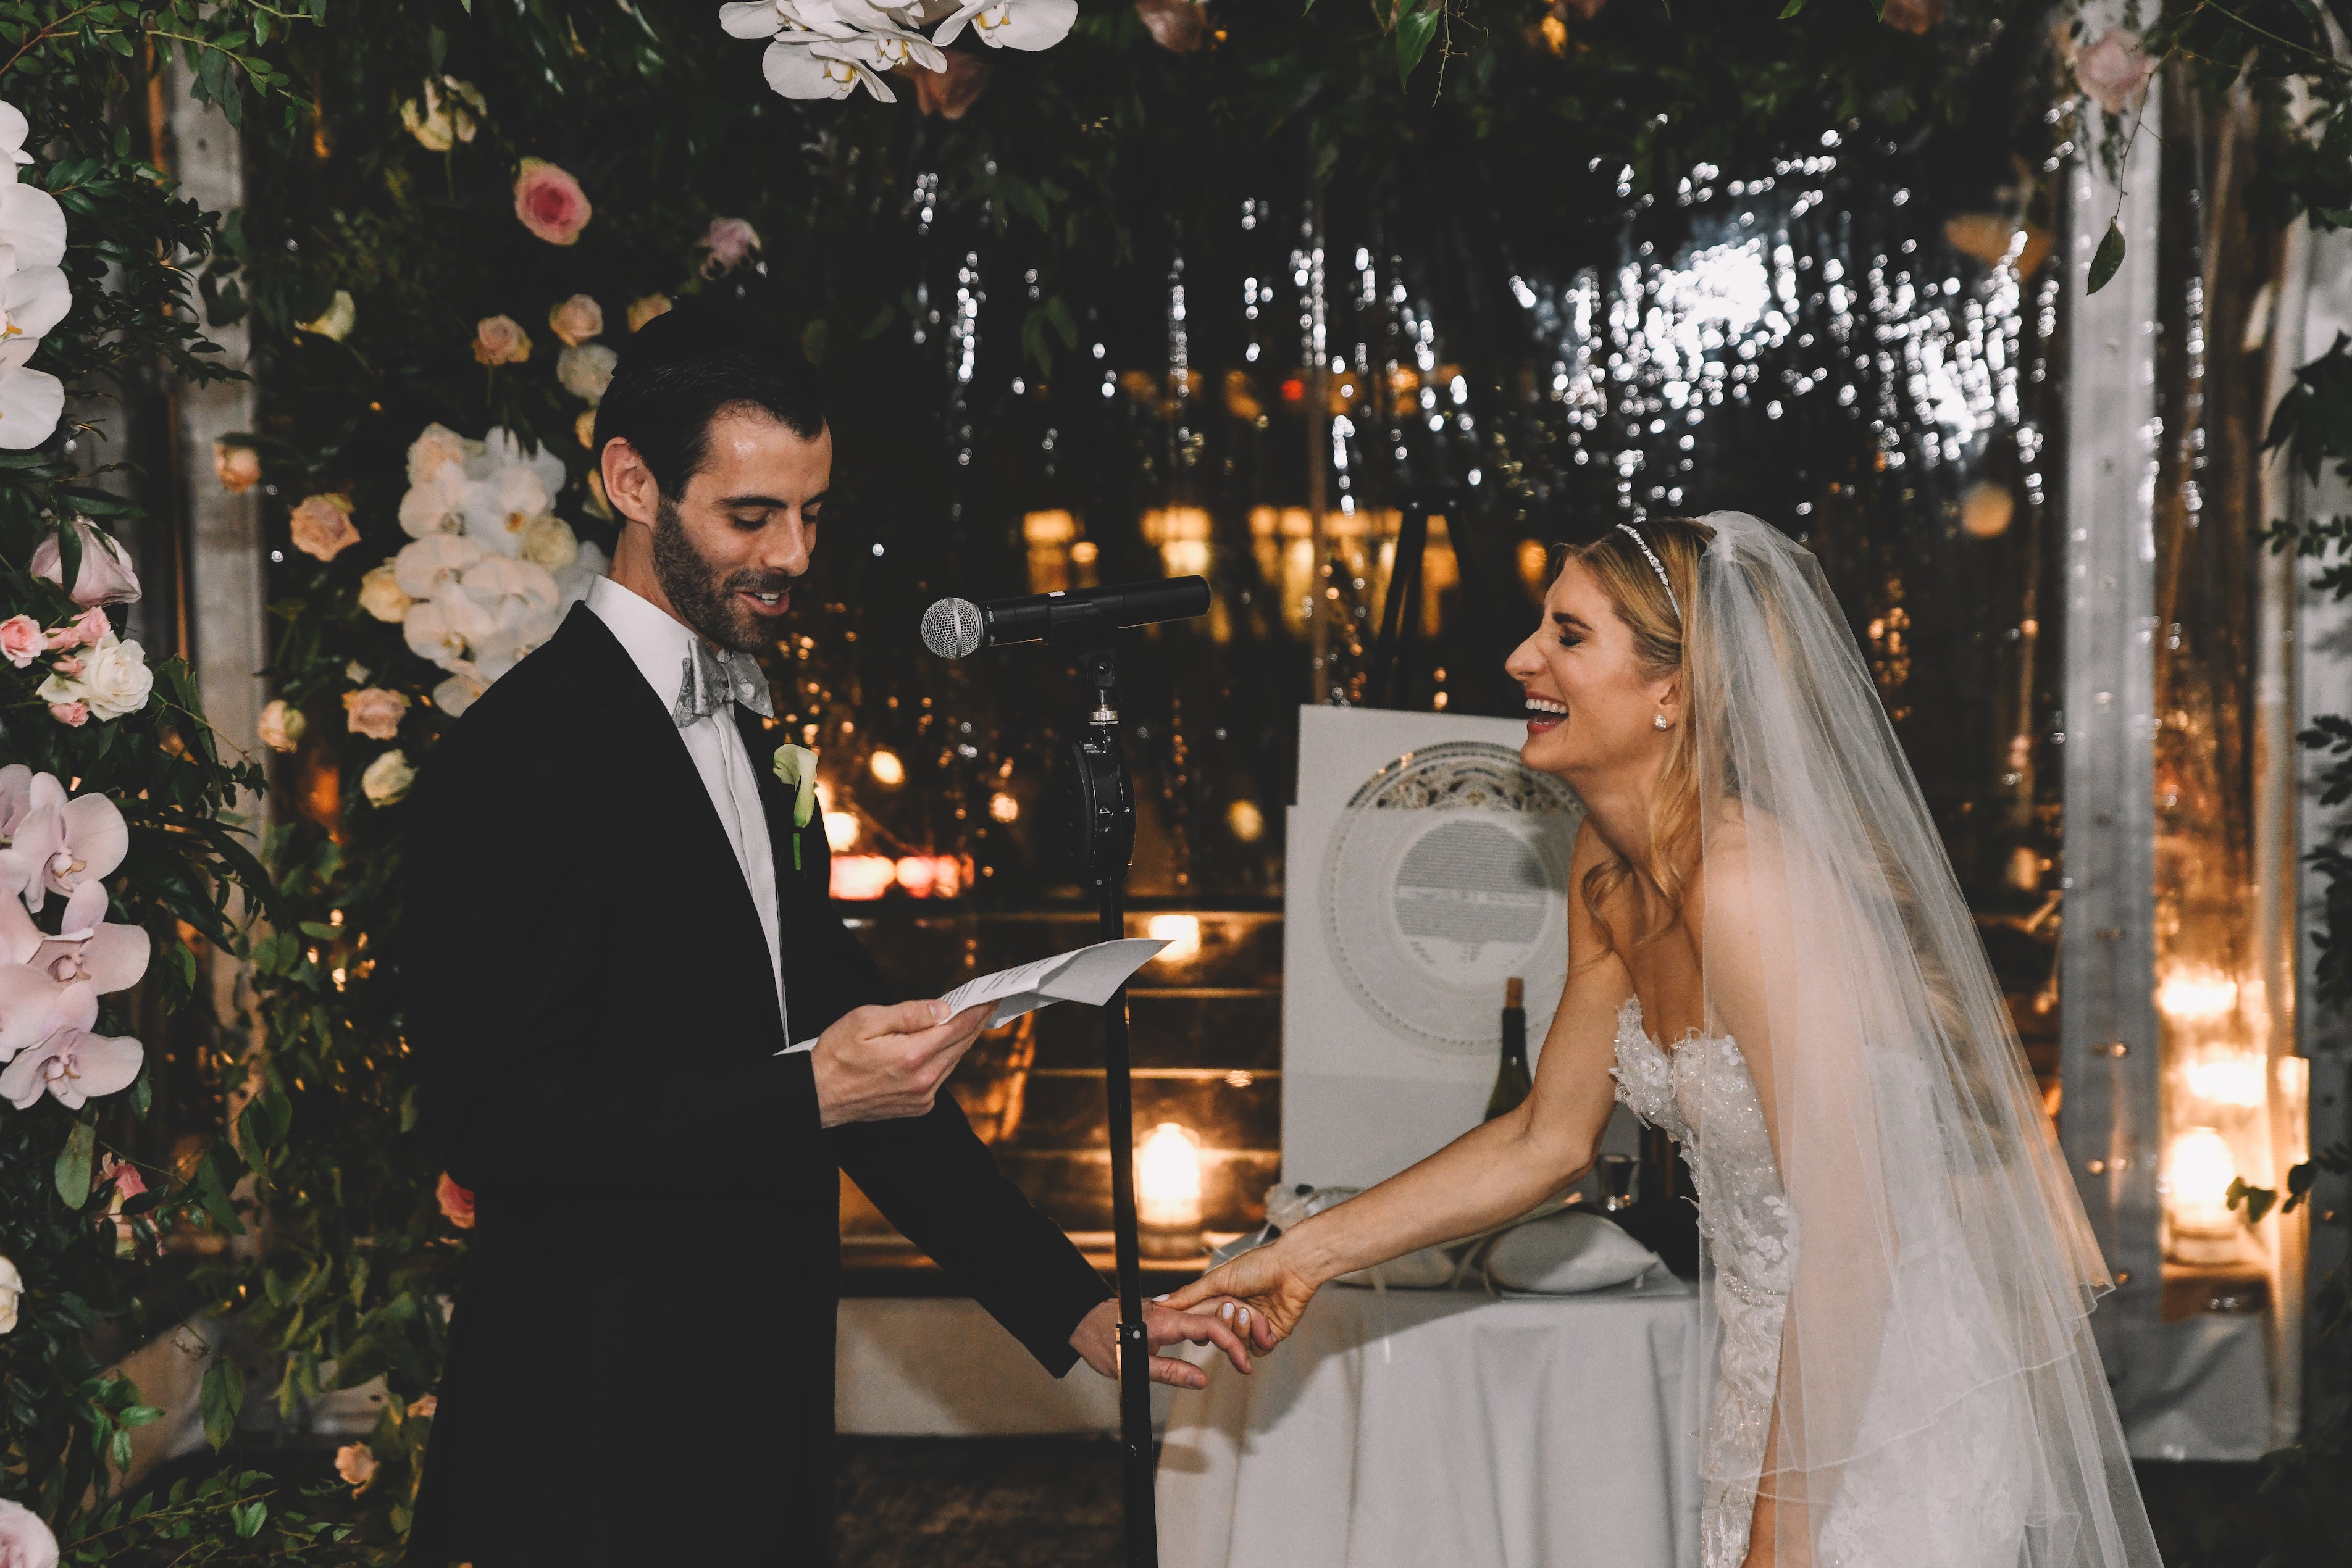 New York Jewish wedding vows chuppah